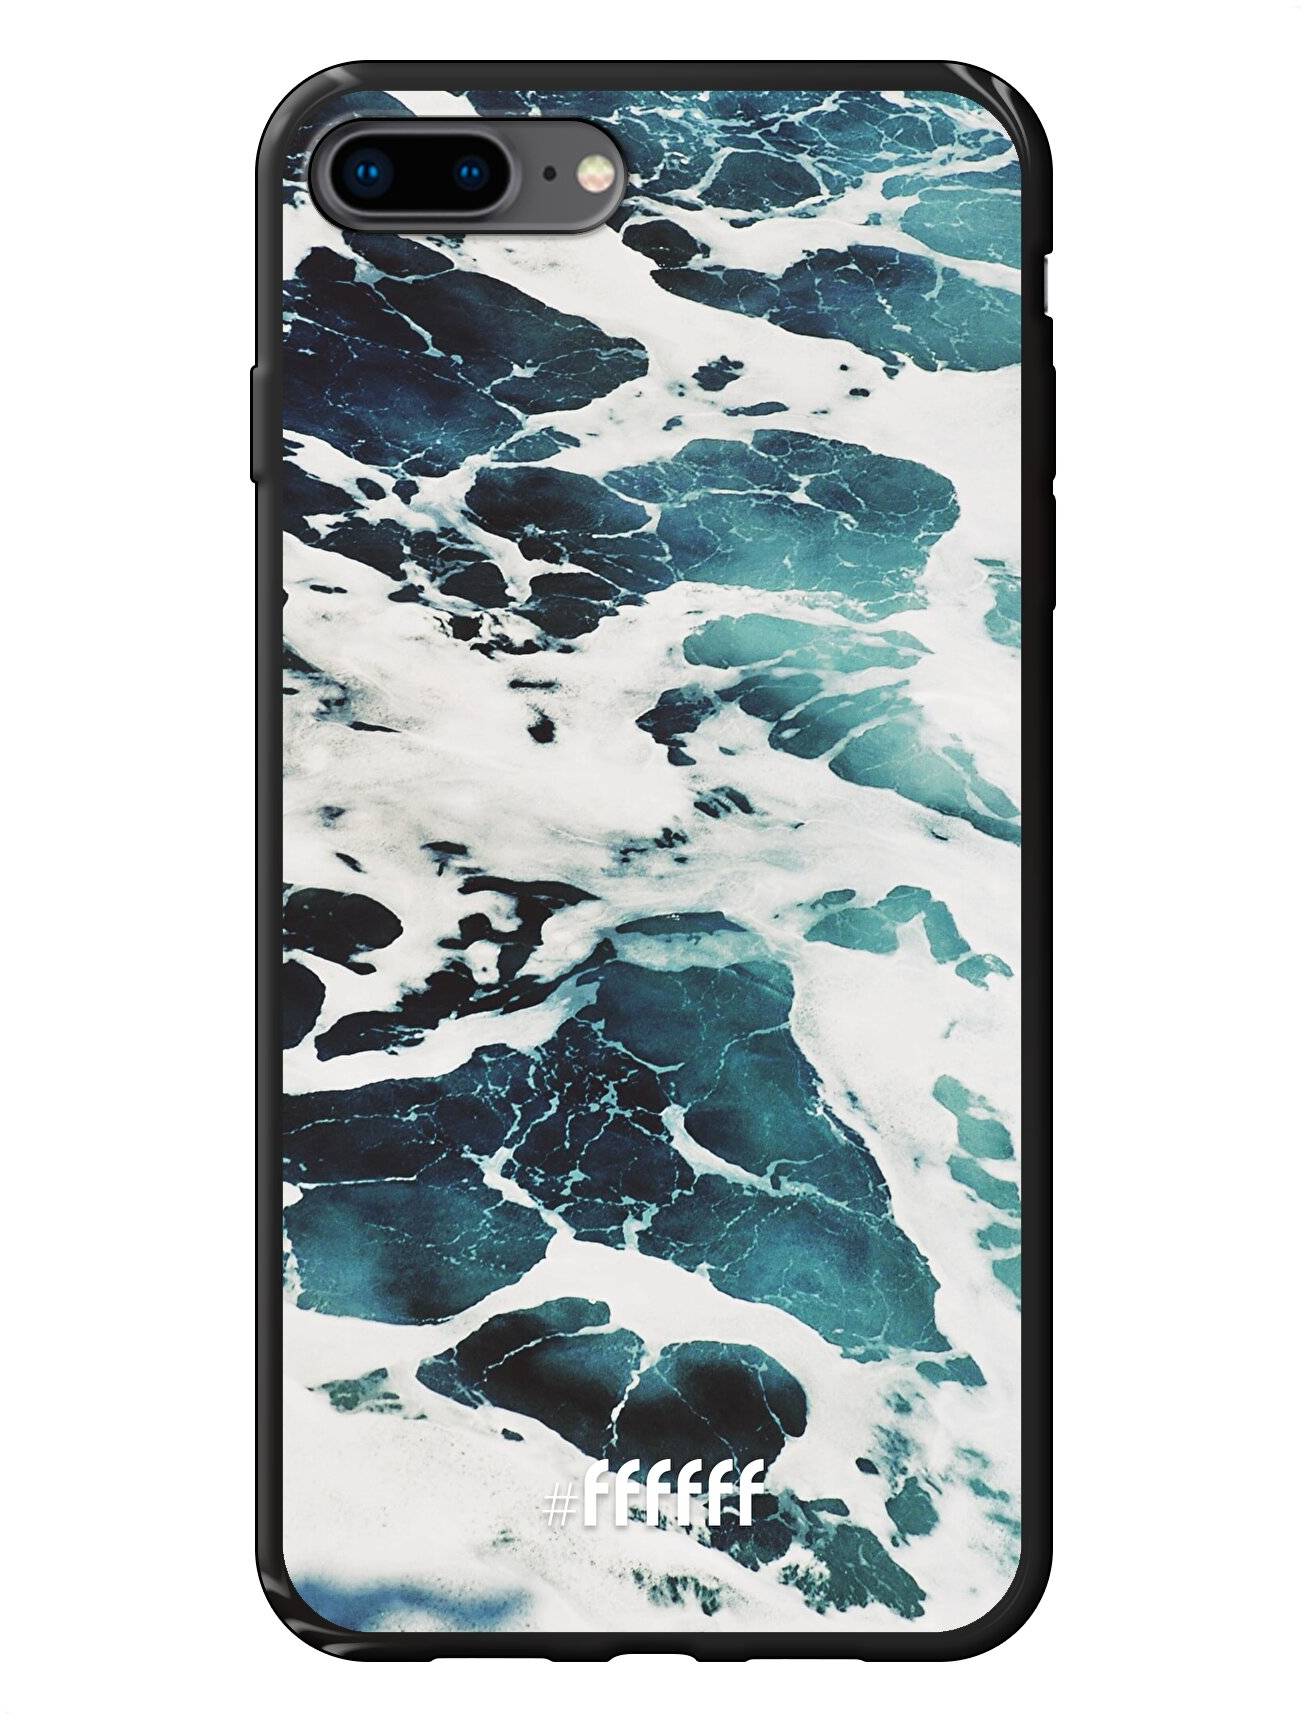 Waves iPhone 7 Plus